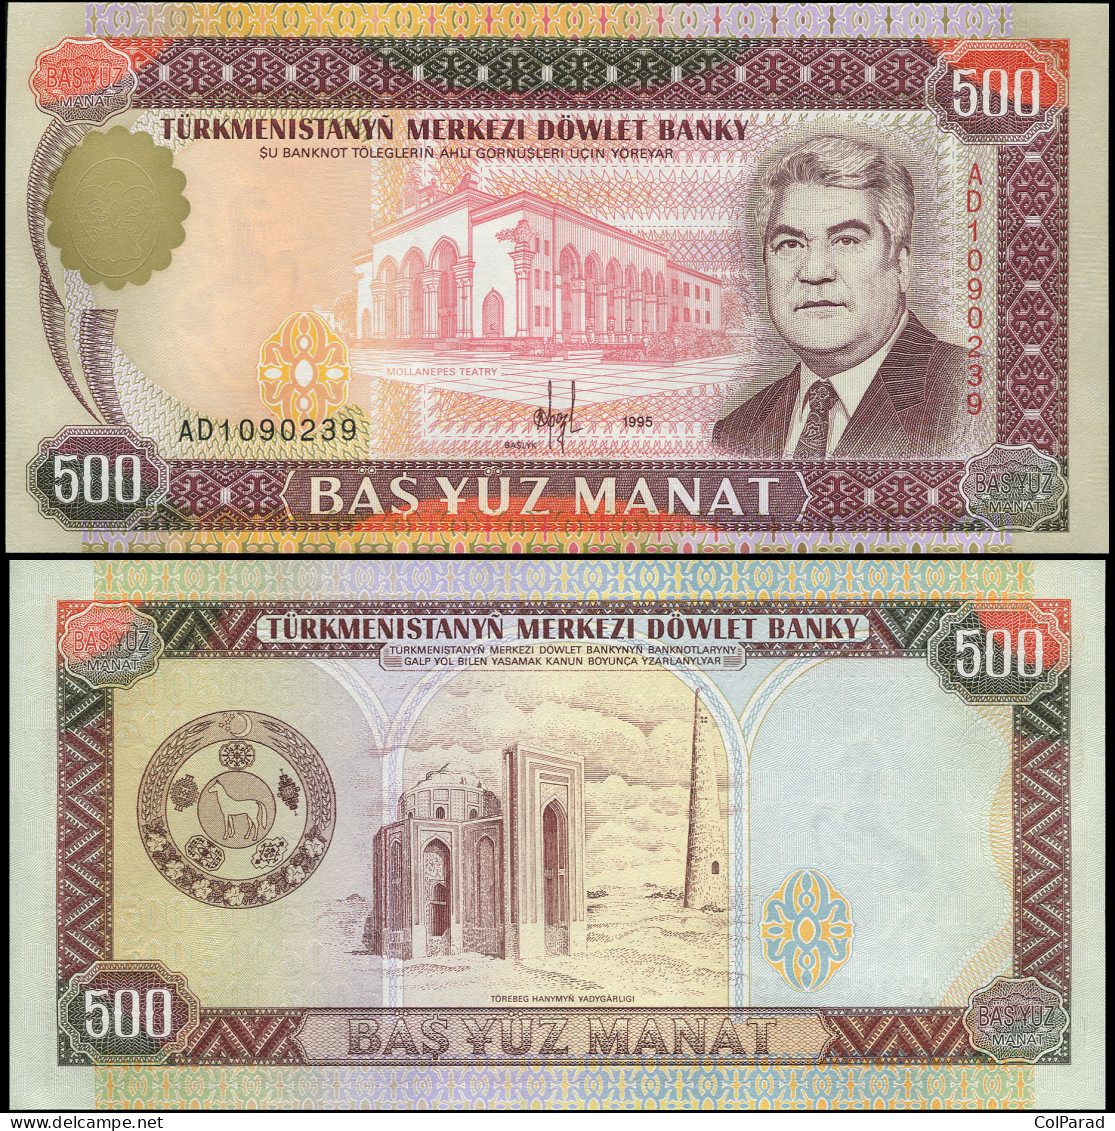 TURKMENISTAN 500 MANAT - 1995 - Paper Unc - P.7b Banknote - Turkmenistán